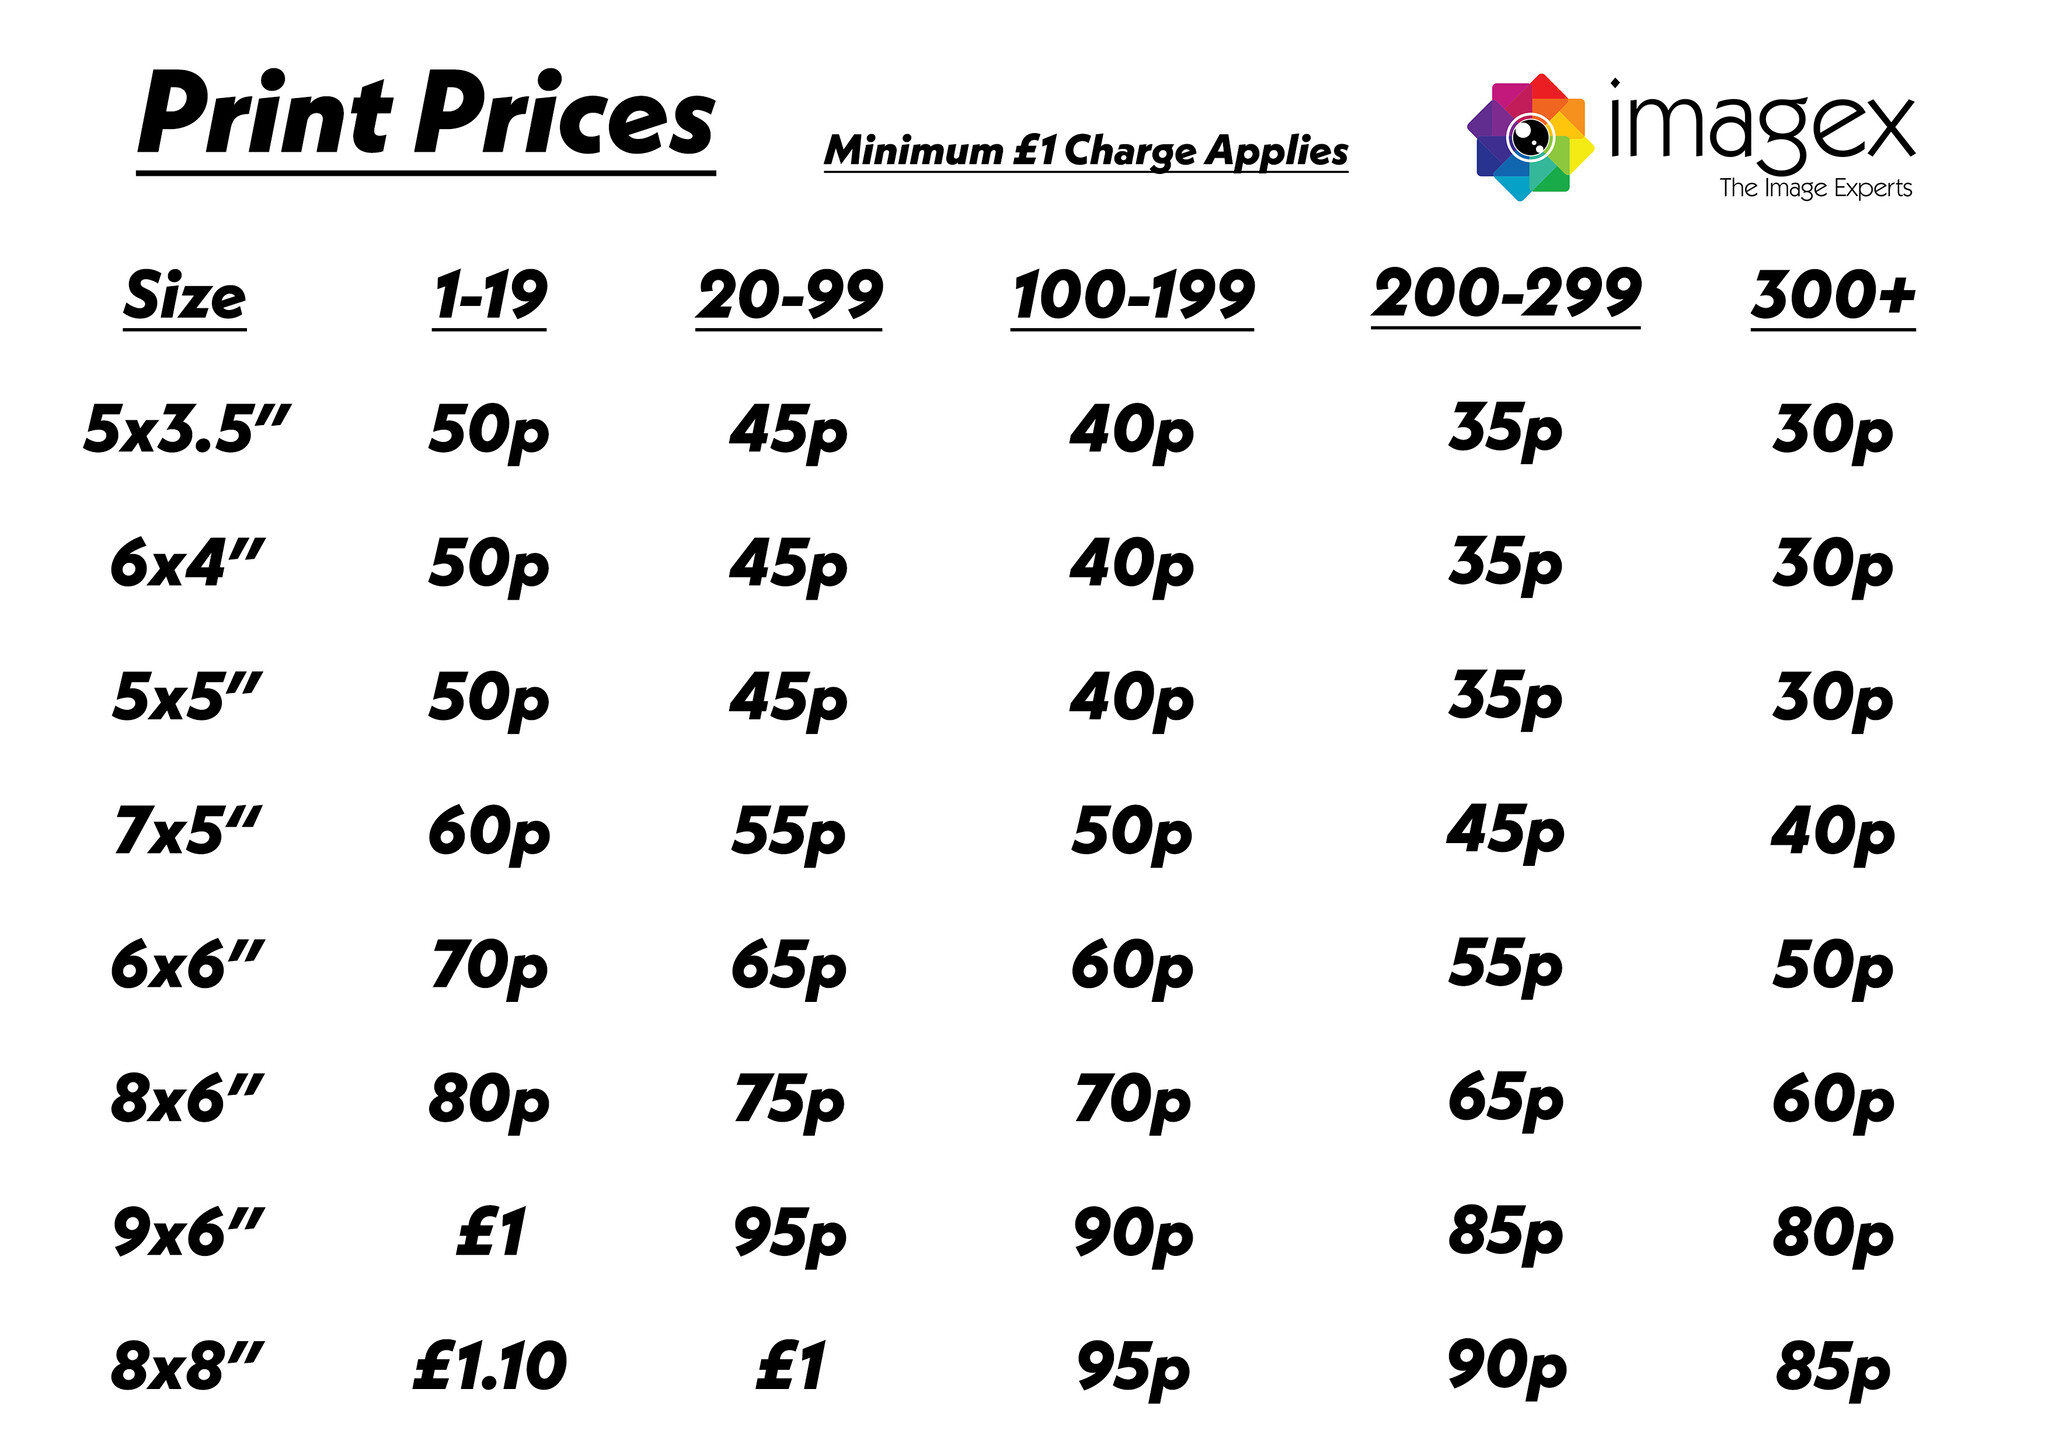 Standard Print Prices